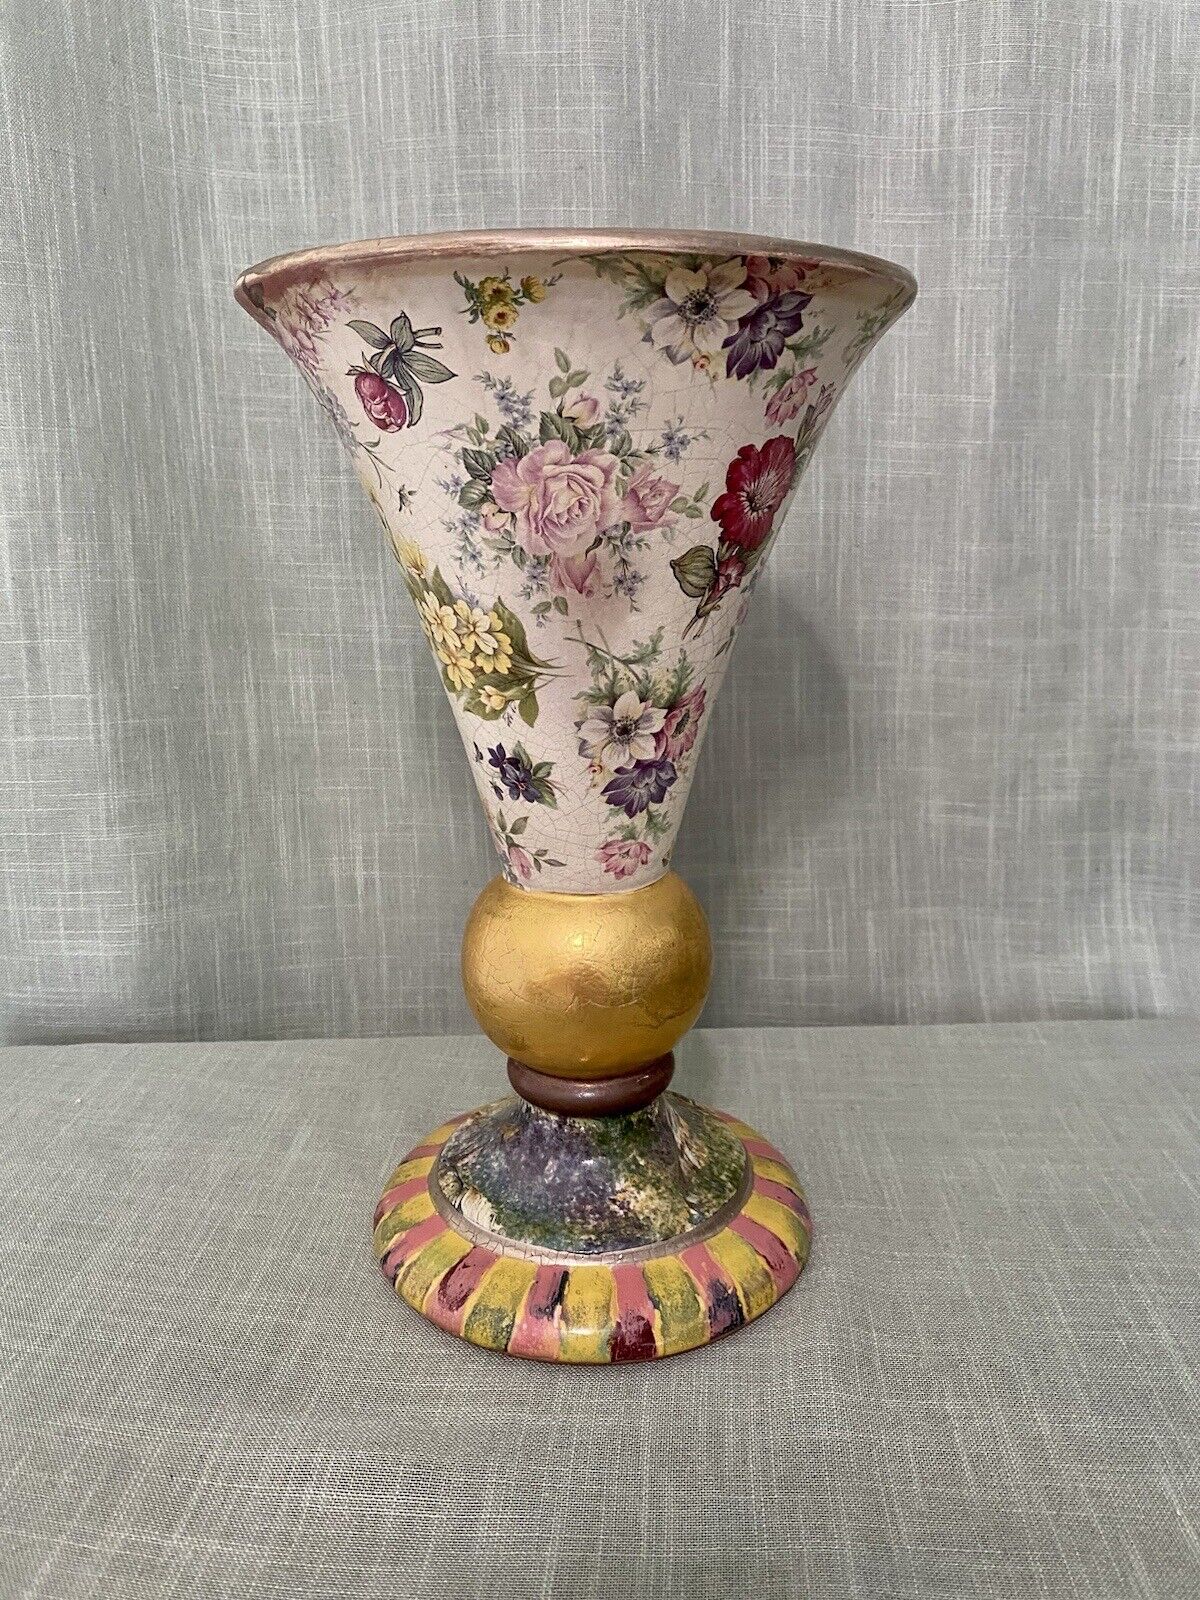 Vintage Retired Mackenzie Childs Large Floral Ceramic Vase 2001